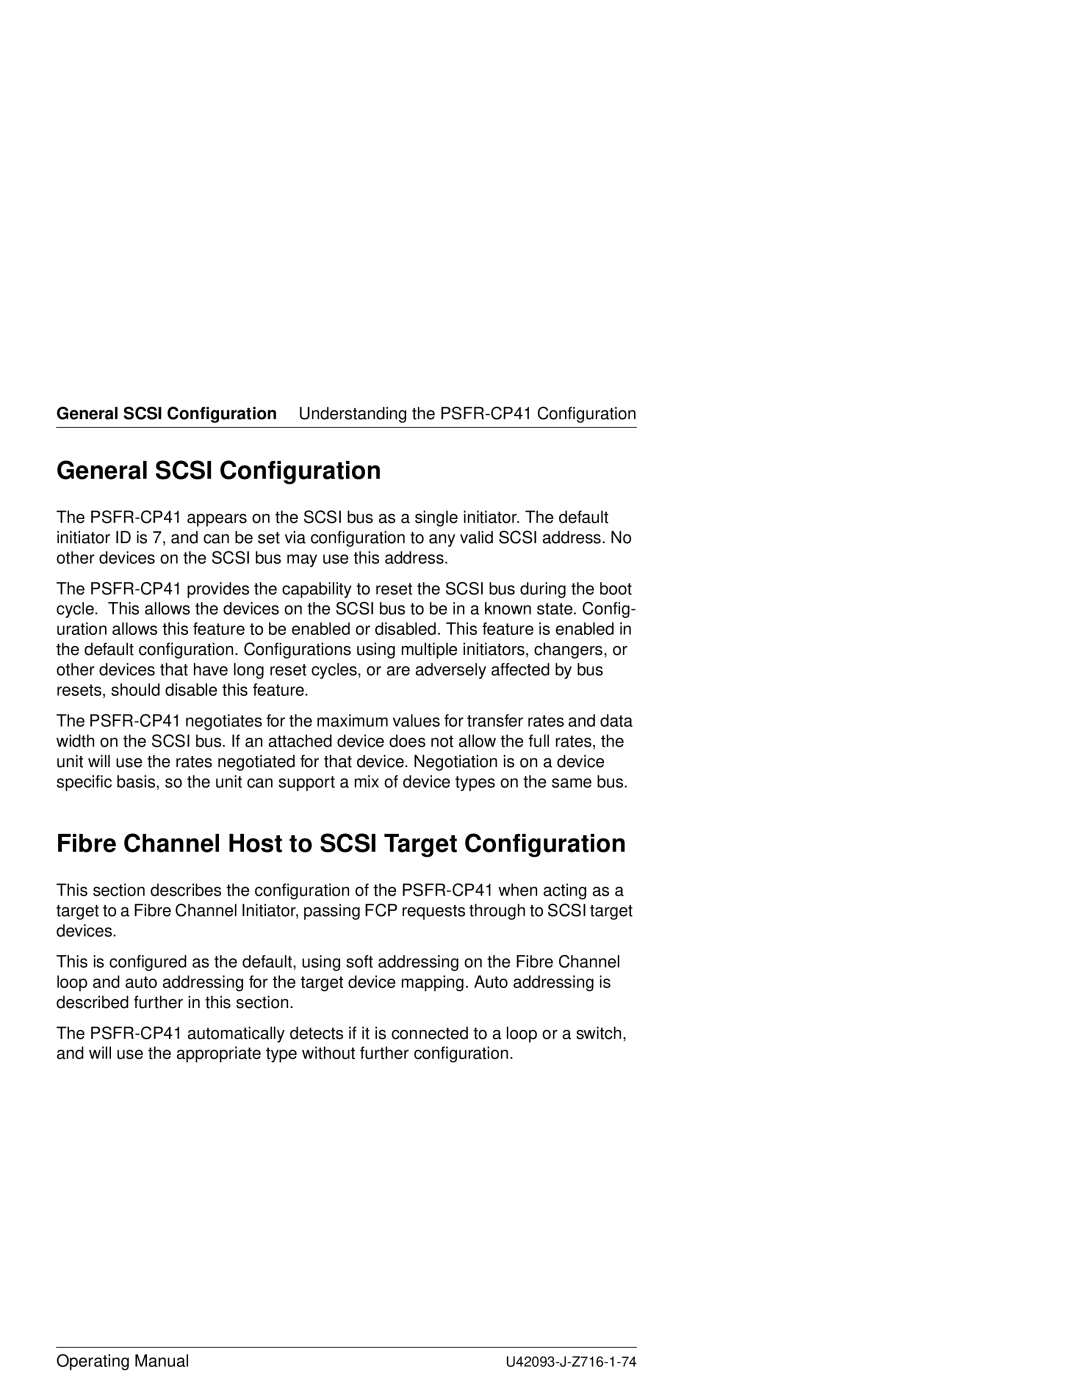 Siemens PSFR-CP41 manual General Scsi Configuration, Fibre Channel Host to Scsi Target Configuration 